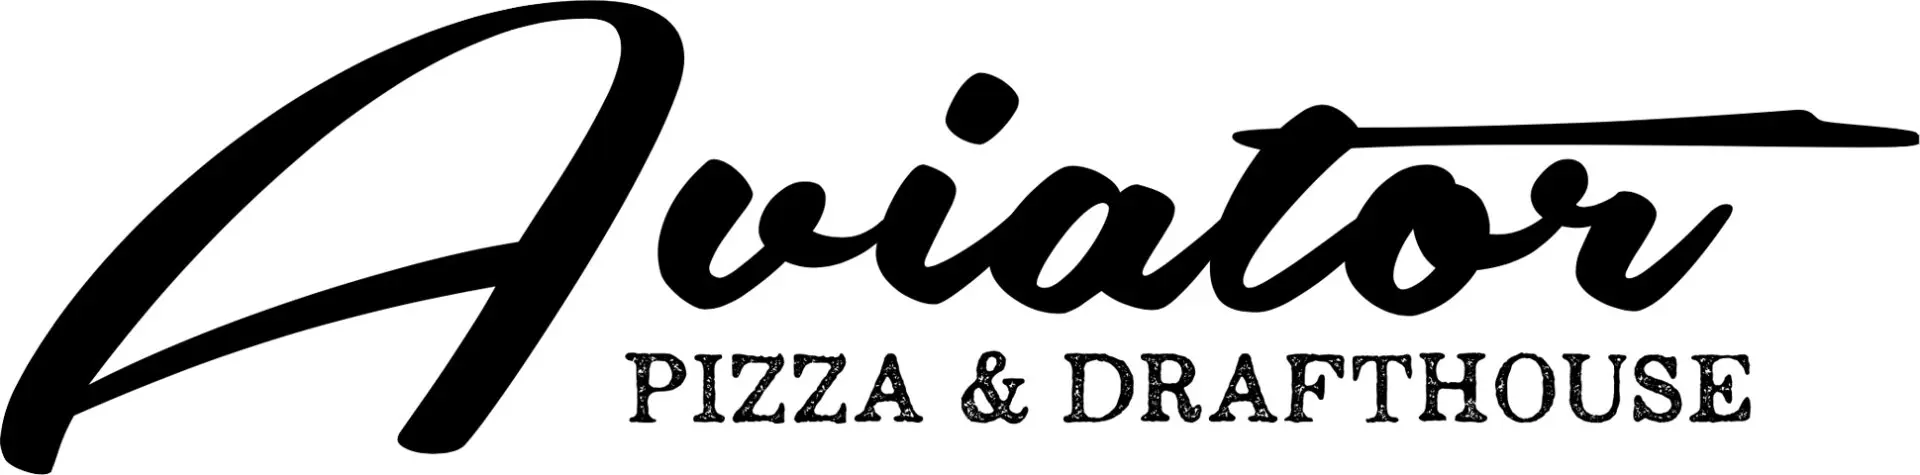 Aviator Pizza & Drafthouse